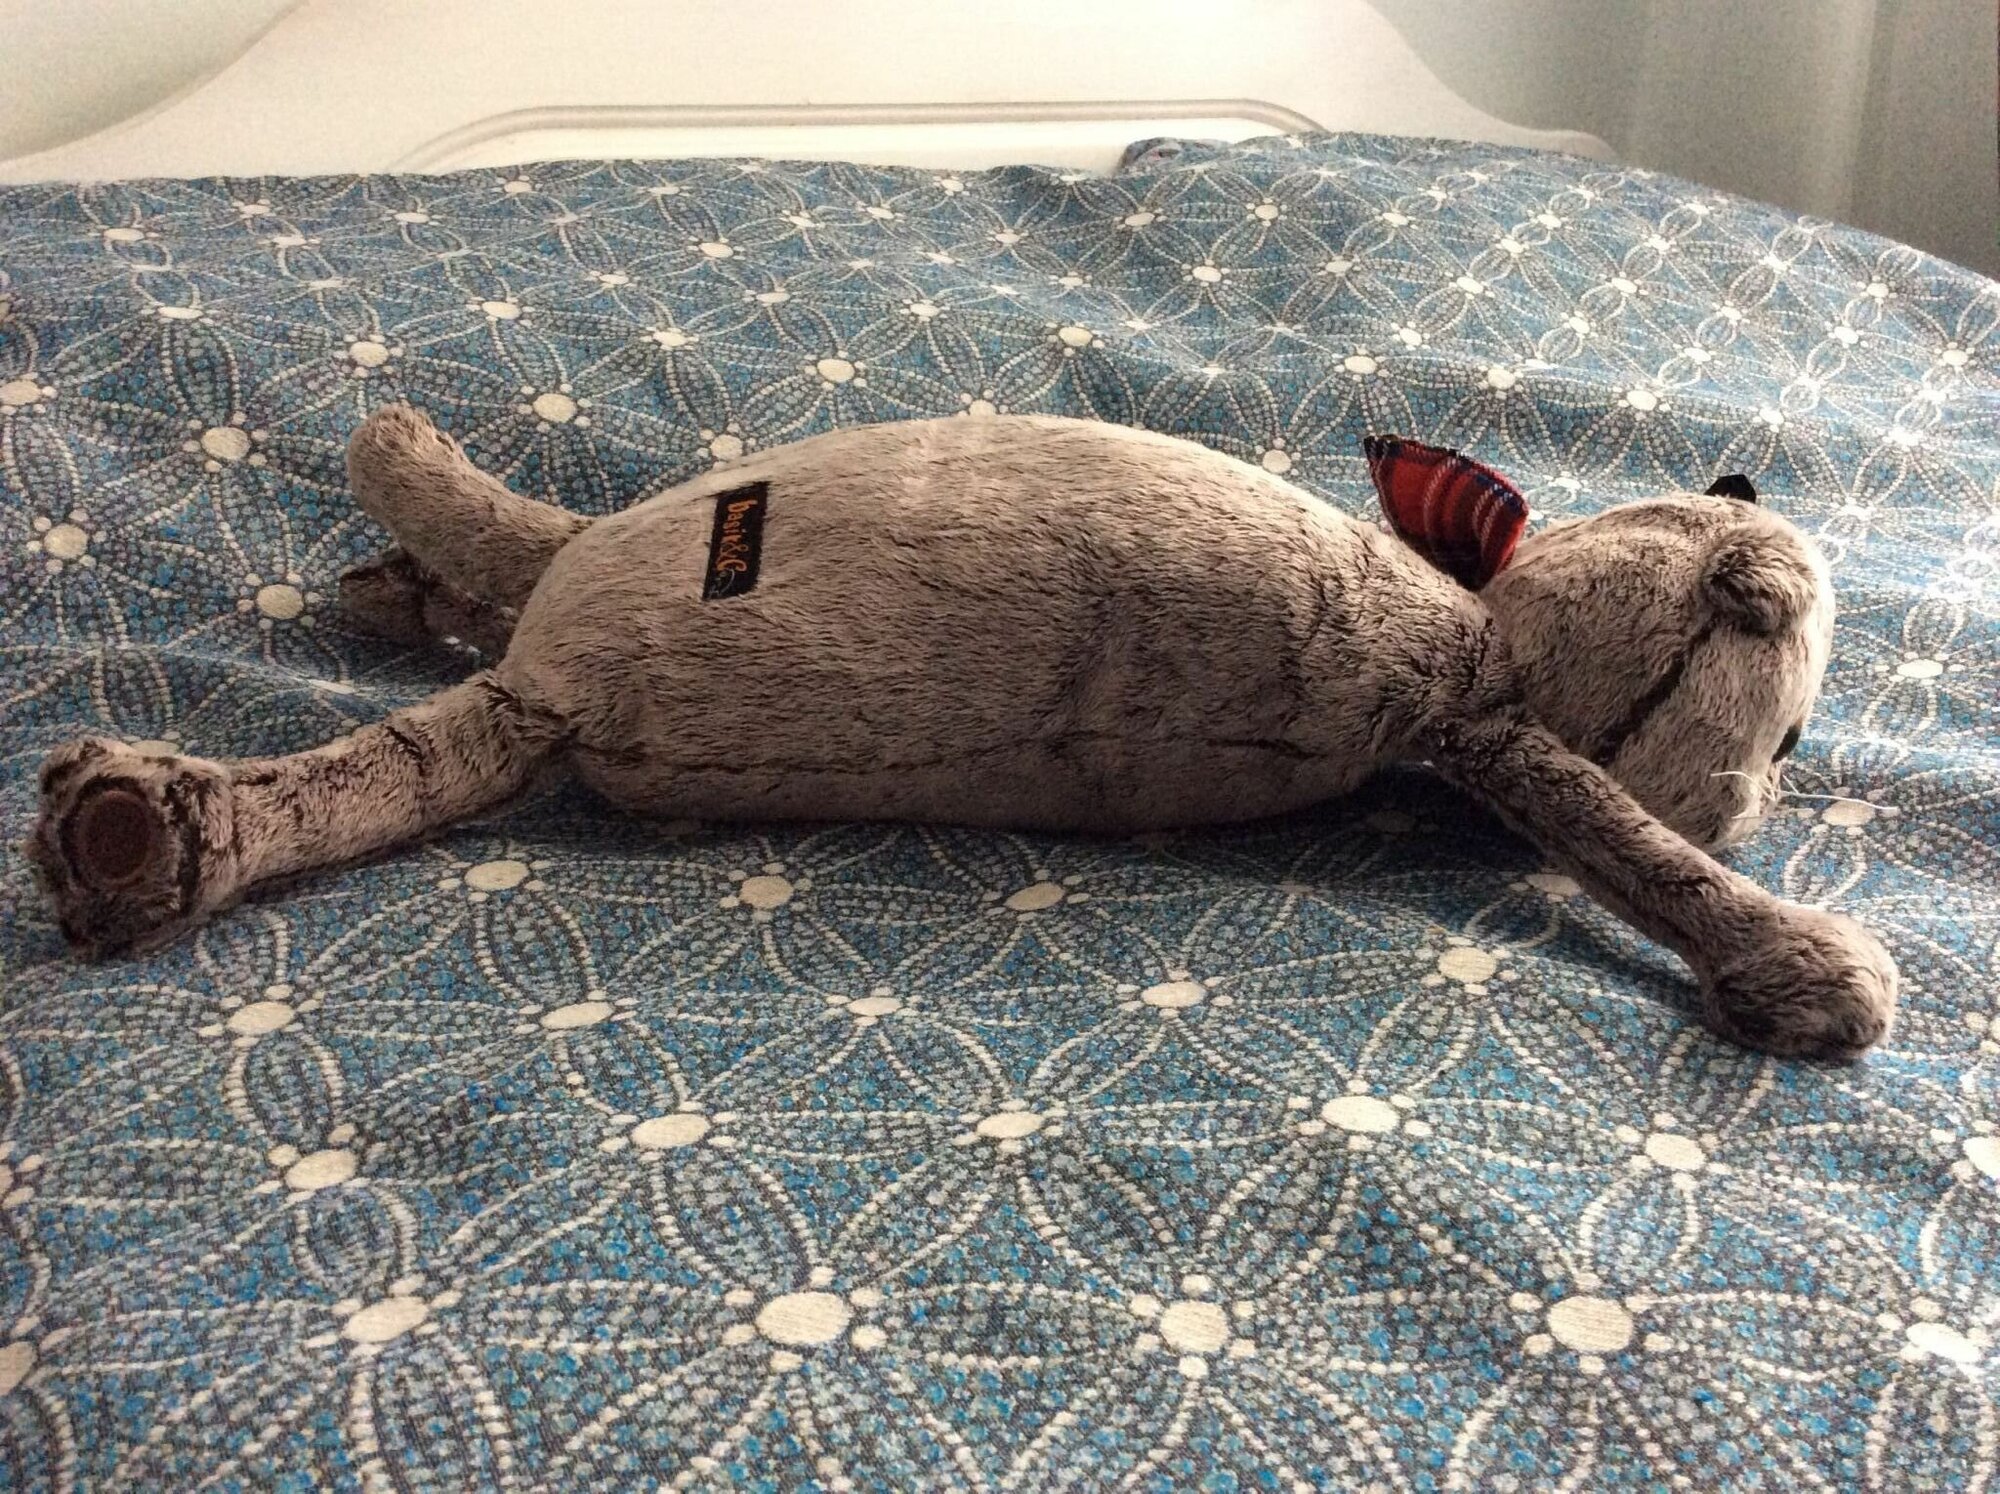 Мягкая игрушка Budi Basa кот Басик - подушка 40 см, Kp40-012